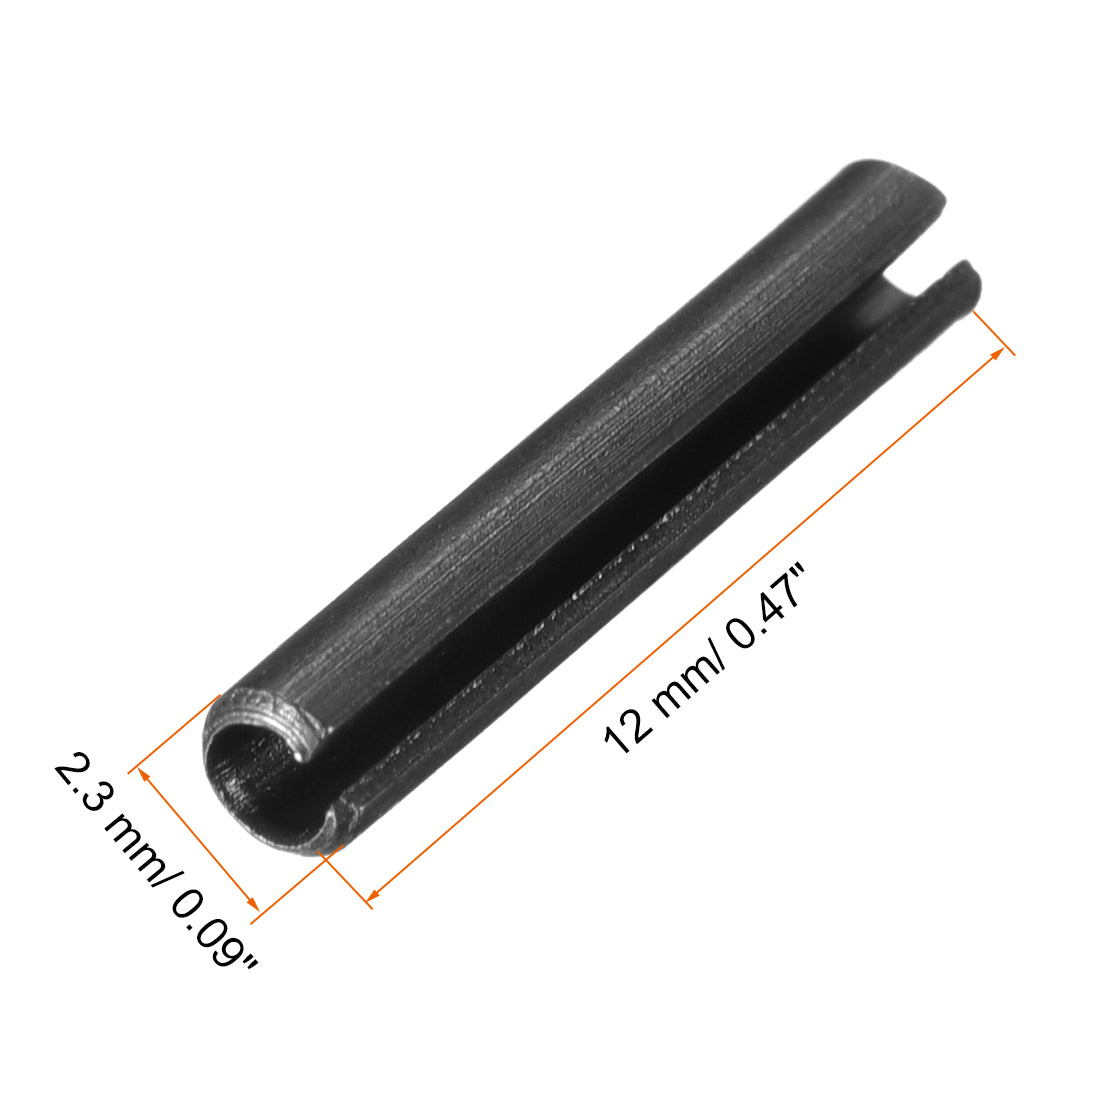 Uxcell Uxcell 2.3mm x 20mm Dowel Pin Carbon Steel Split Spring Roll Shelf Support Pin Fasten Hardware Black 30 Pcs